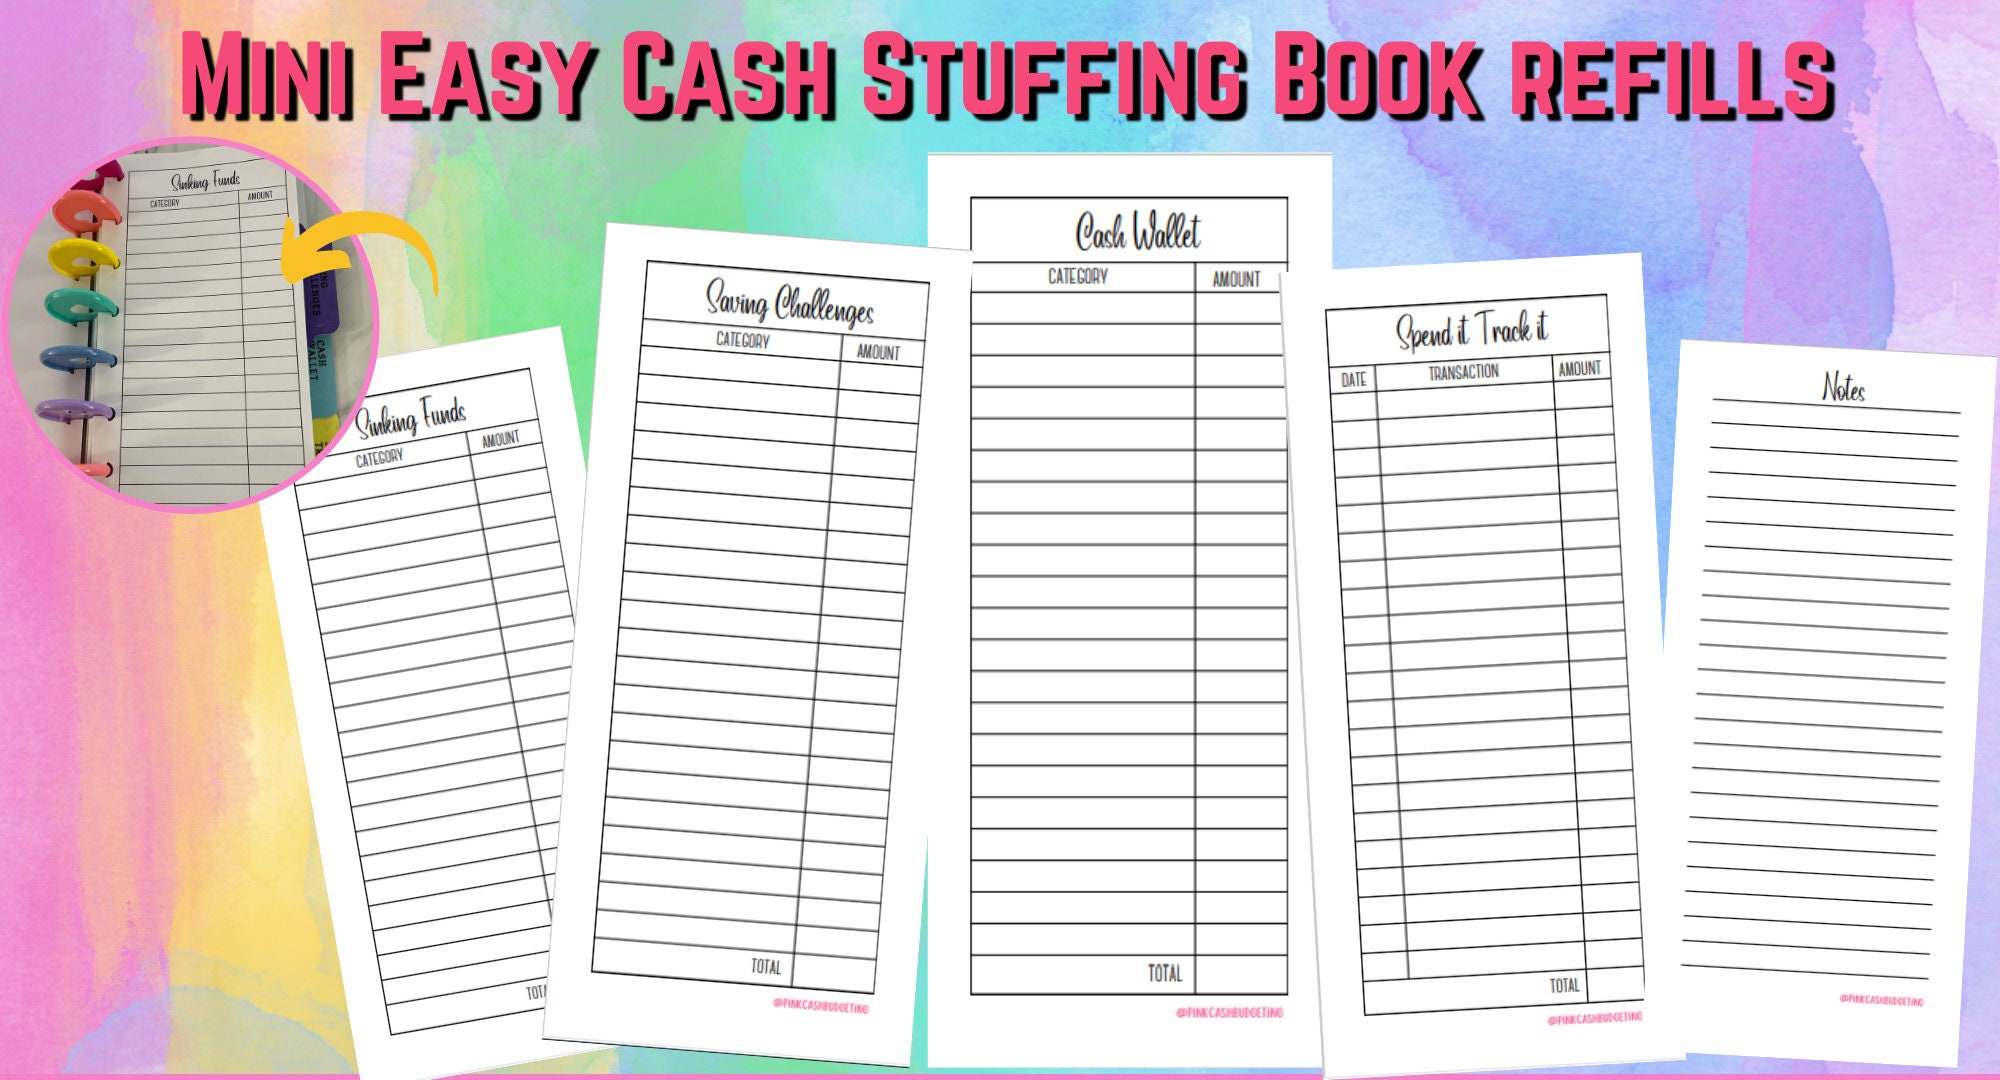 Mini Cash Stuffing Book Refills